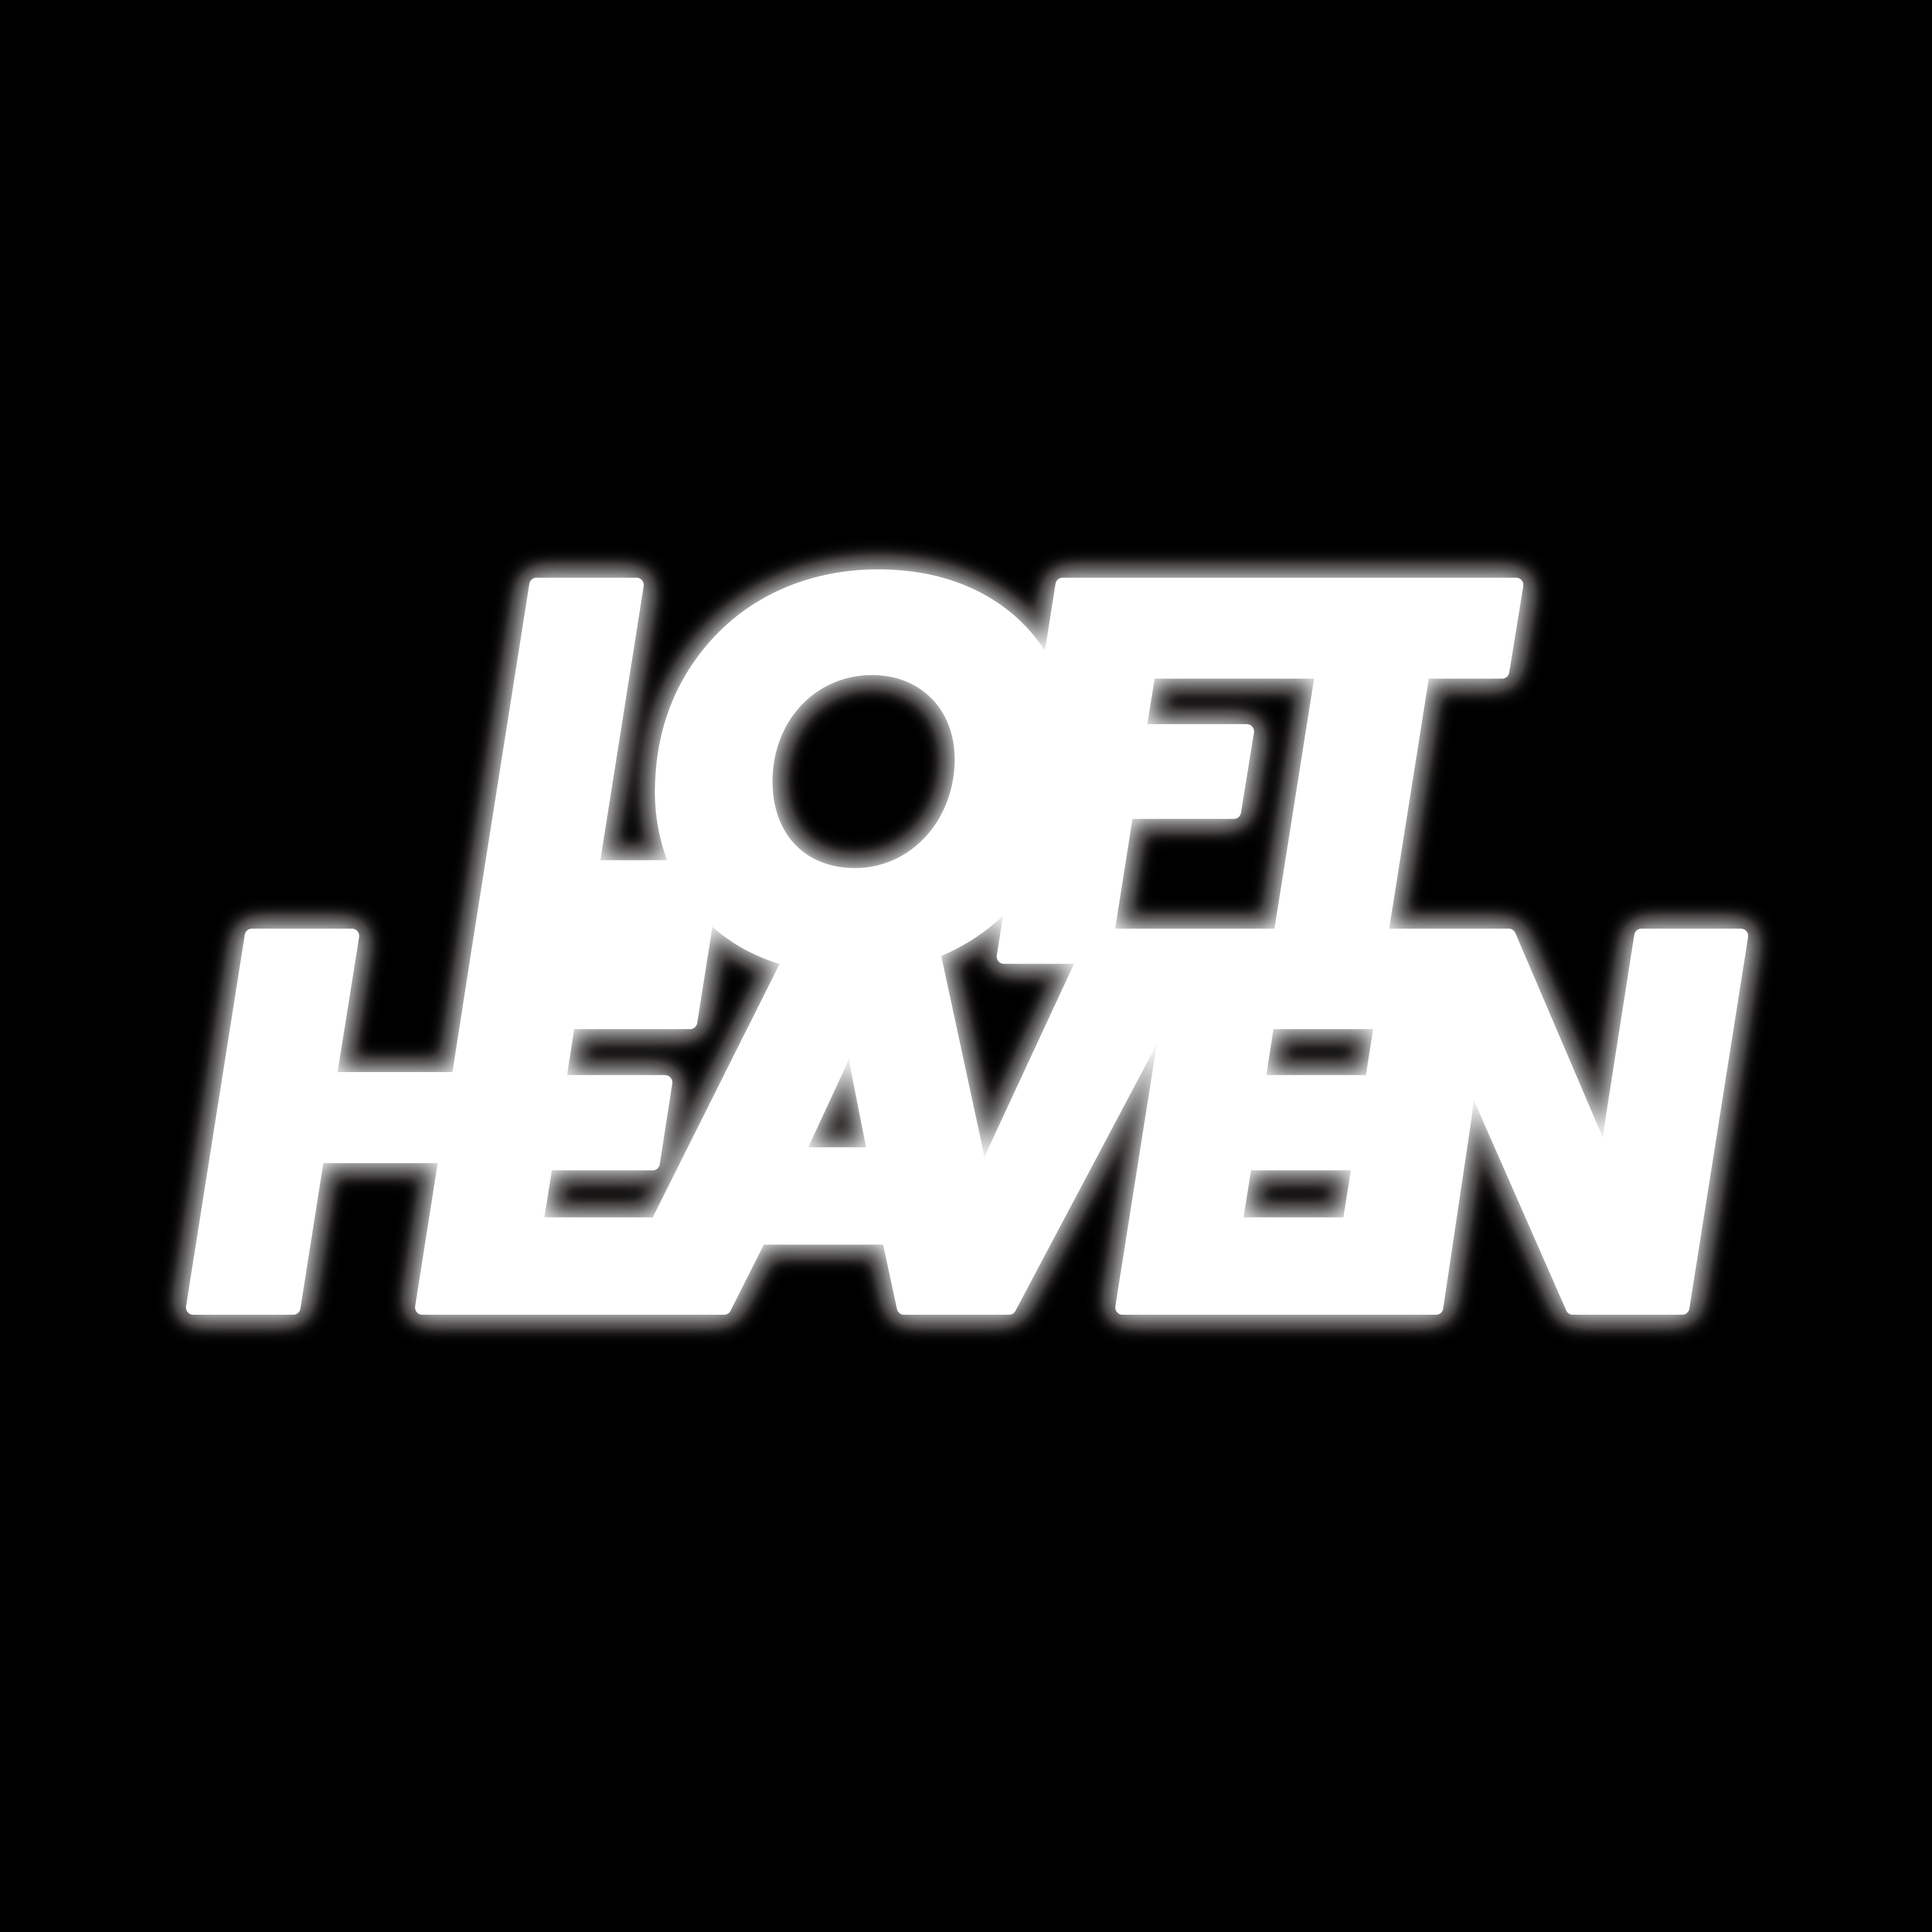 http://rooftop.cc/news/2018/07/26/LOFT_HEAVEN_logo_glow.jpg